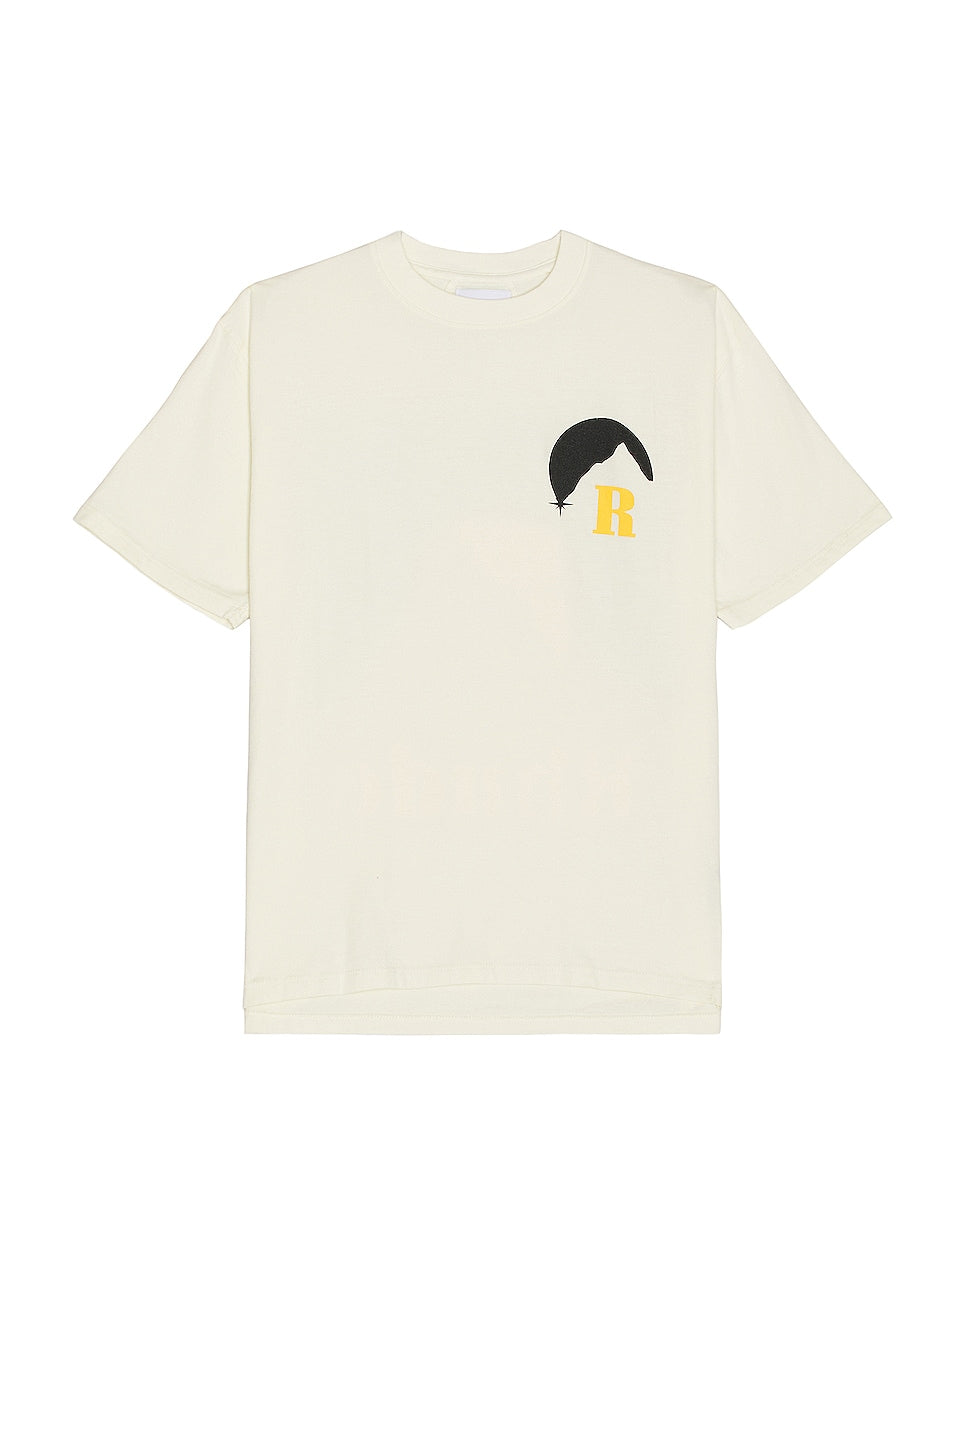 Rhude Moonlight T-Shirt Black/Yellow/Off white